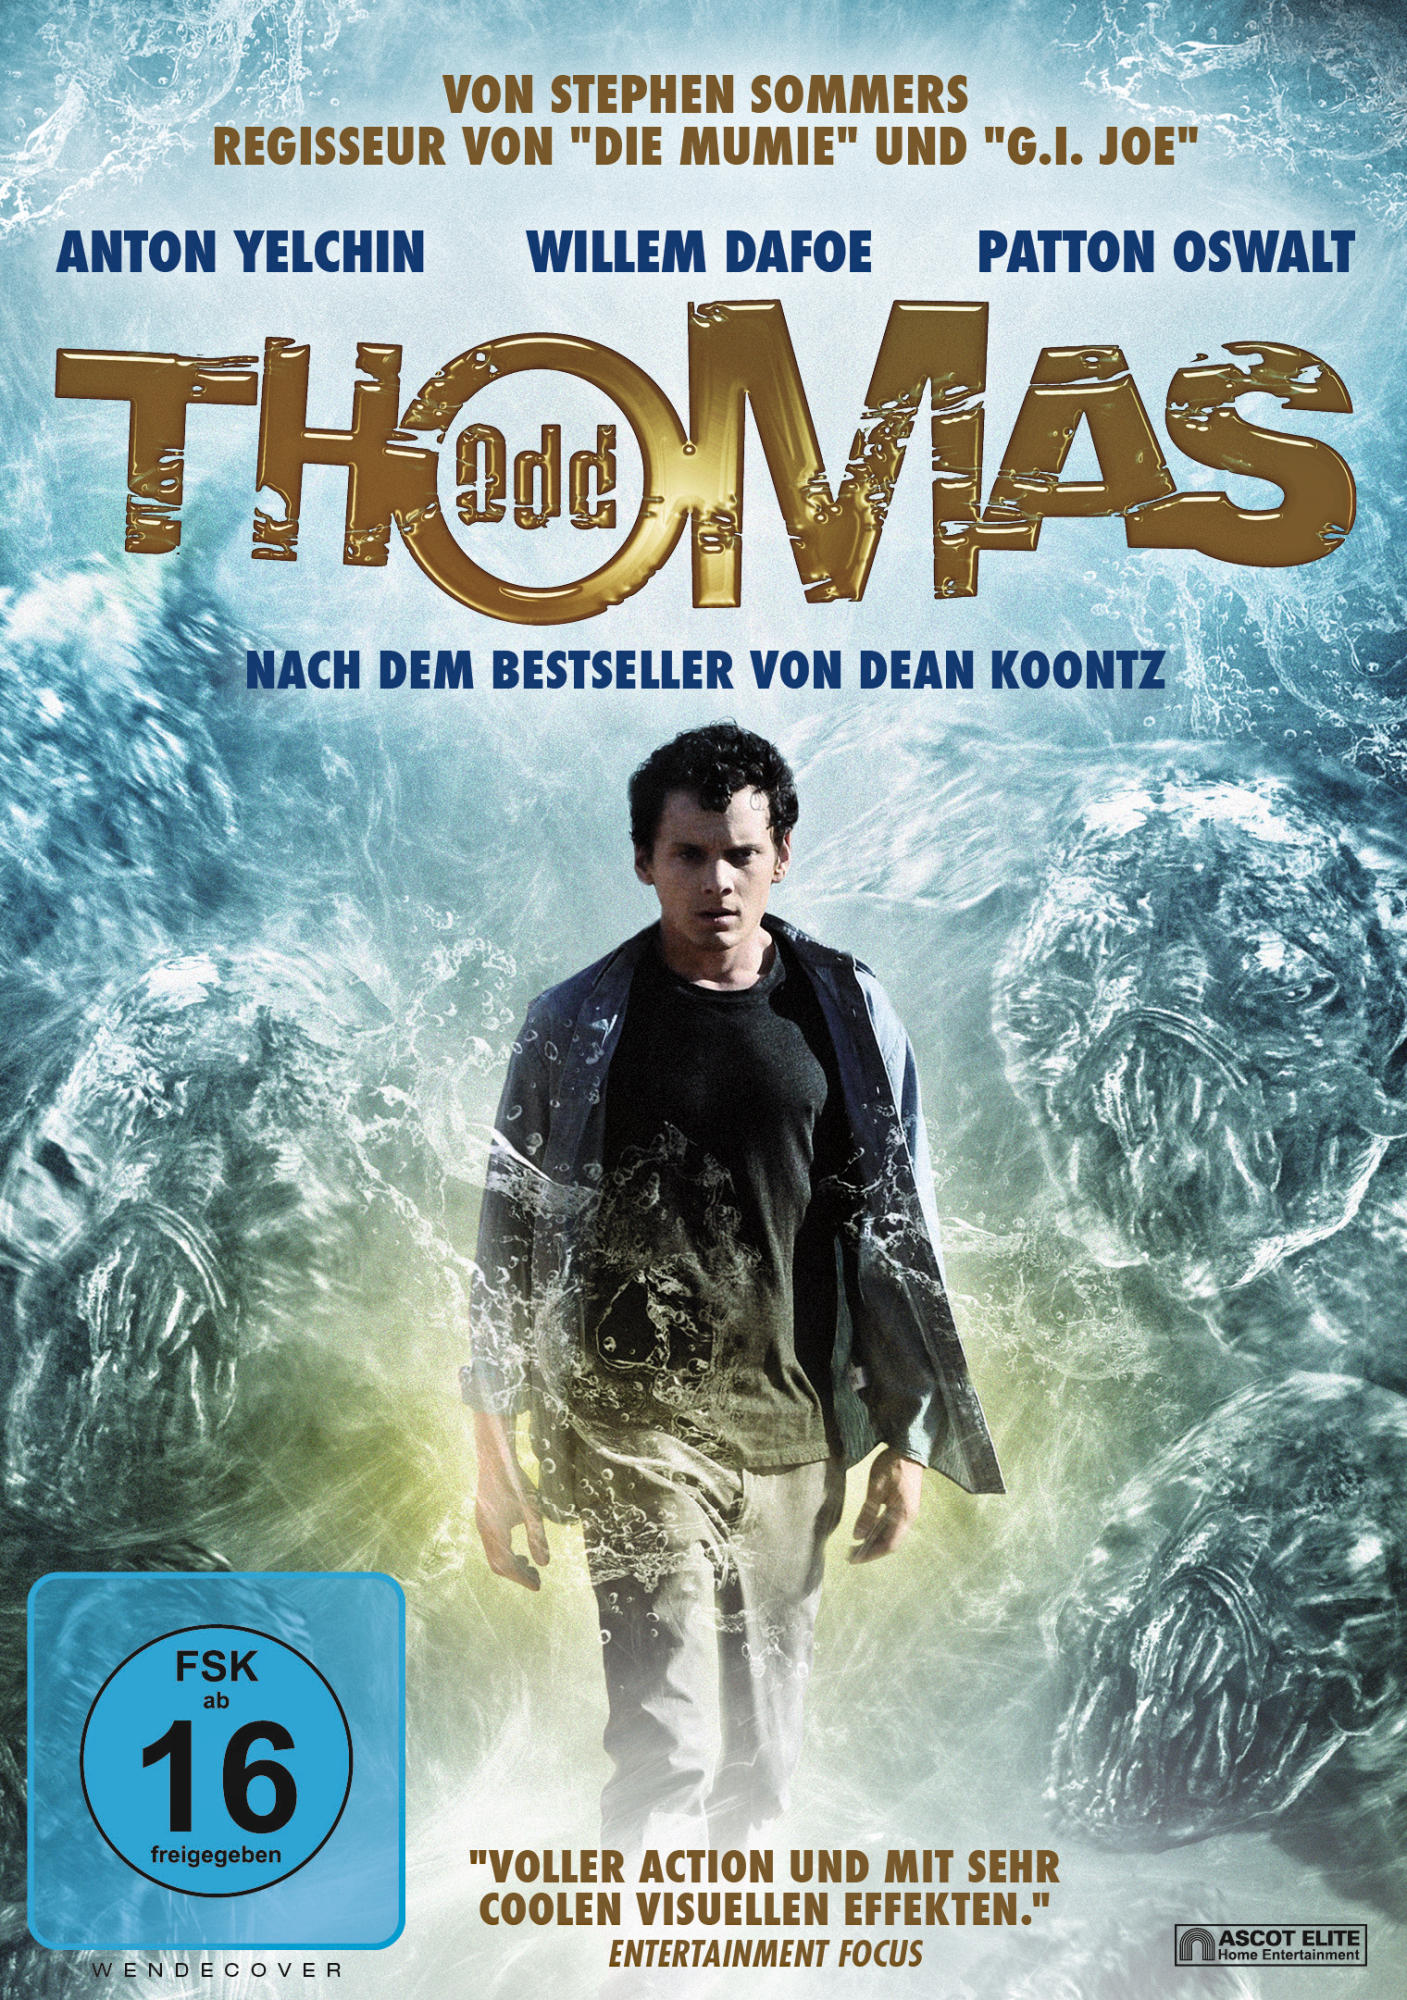 Odd DVD Thomas